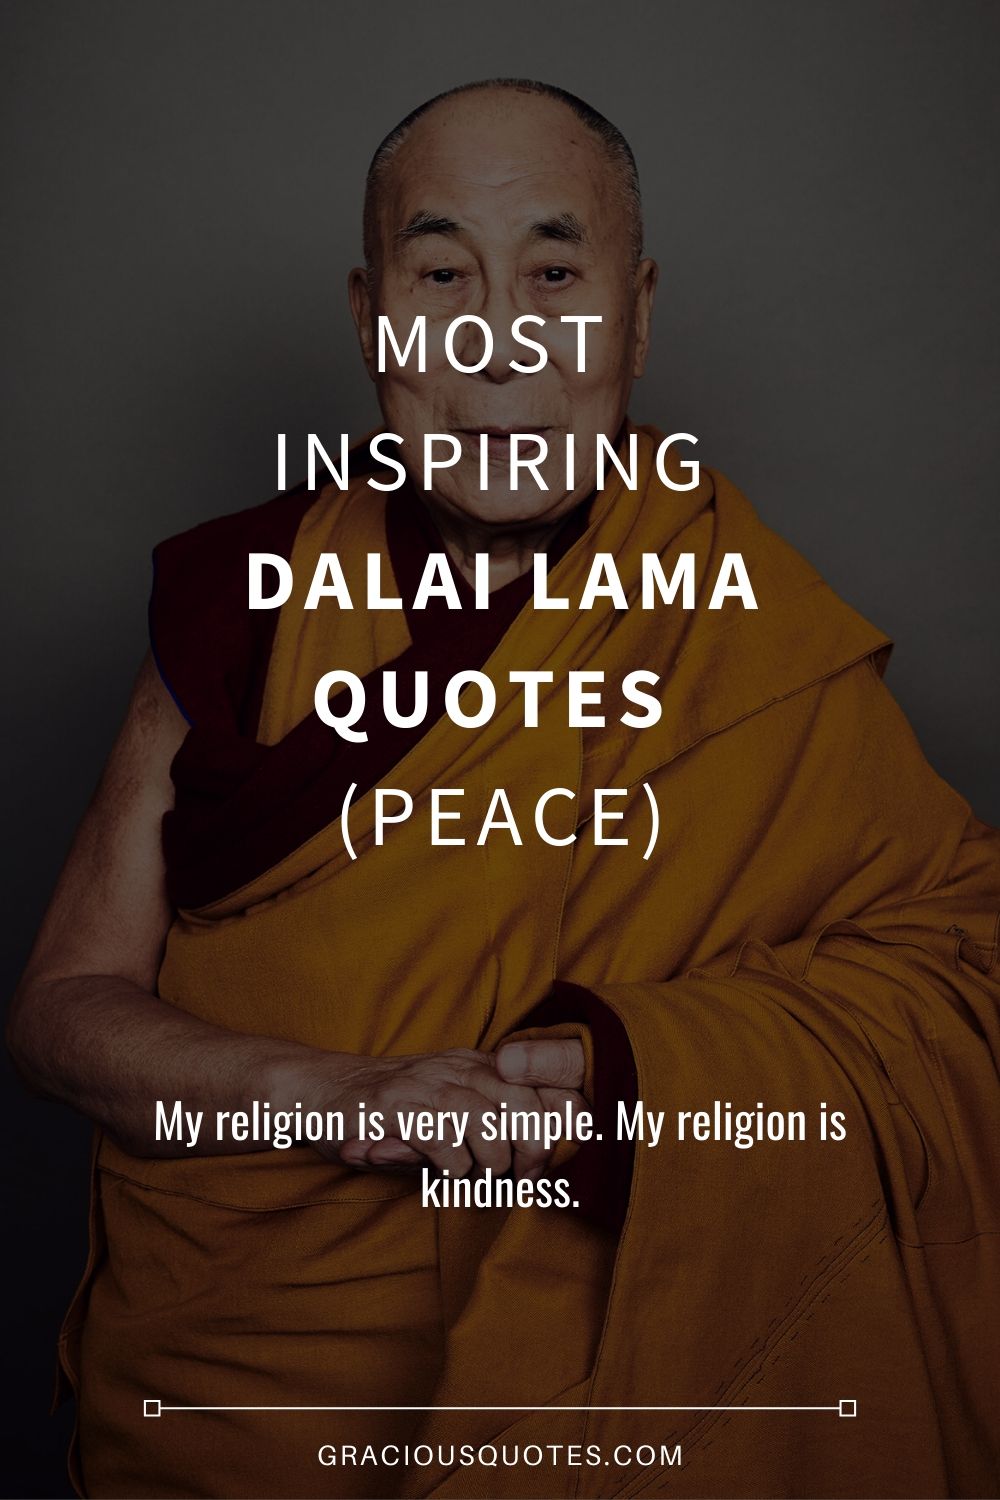 Most Inspiring Dalai Lama Quotes (PEACE) - Gracious Quotes